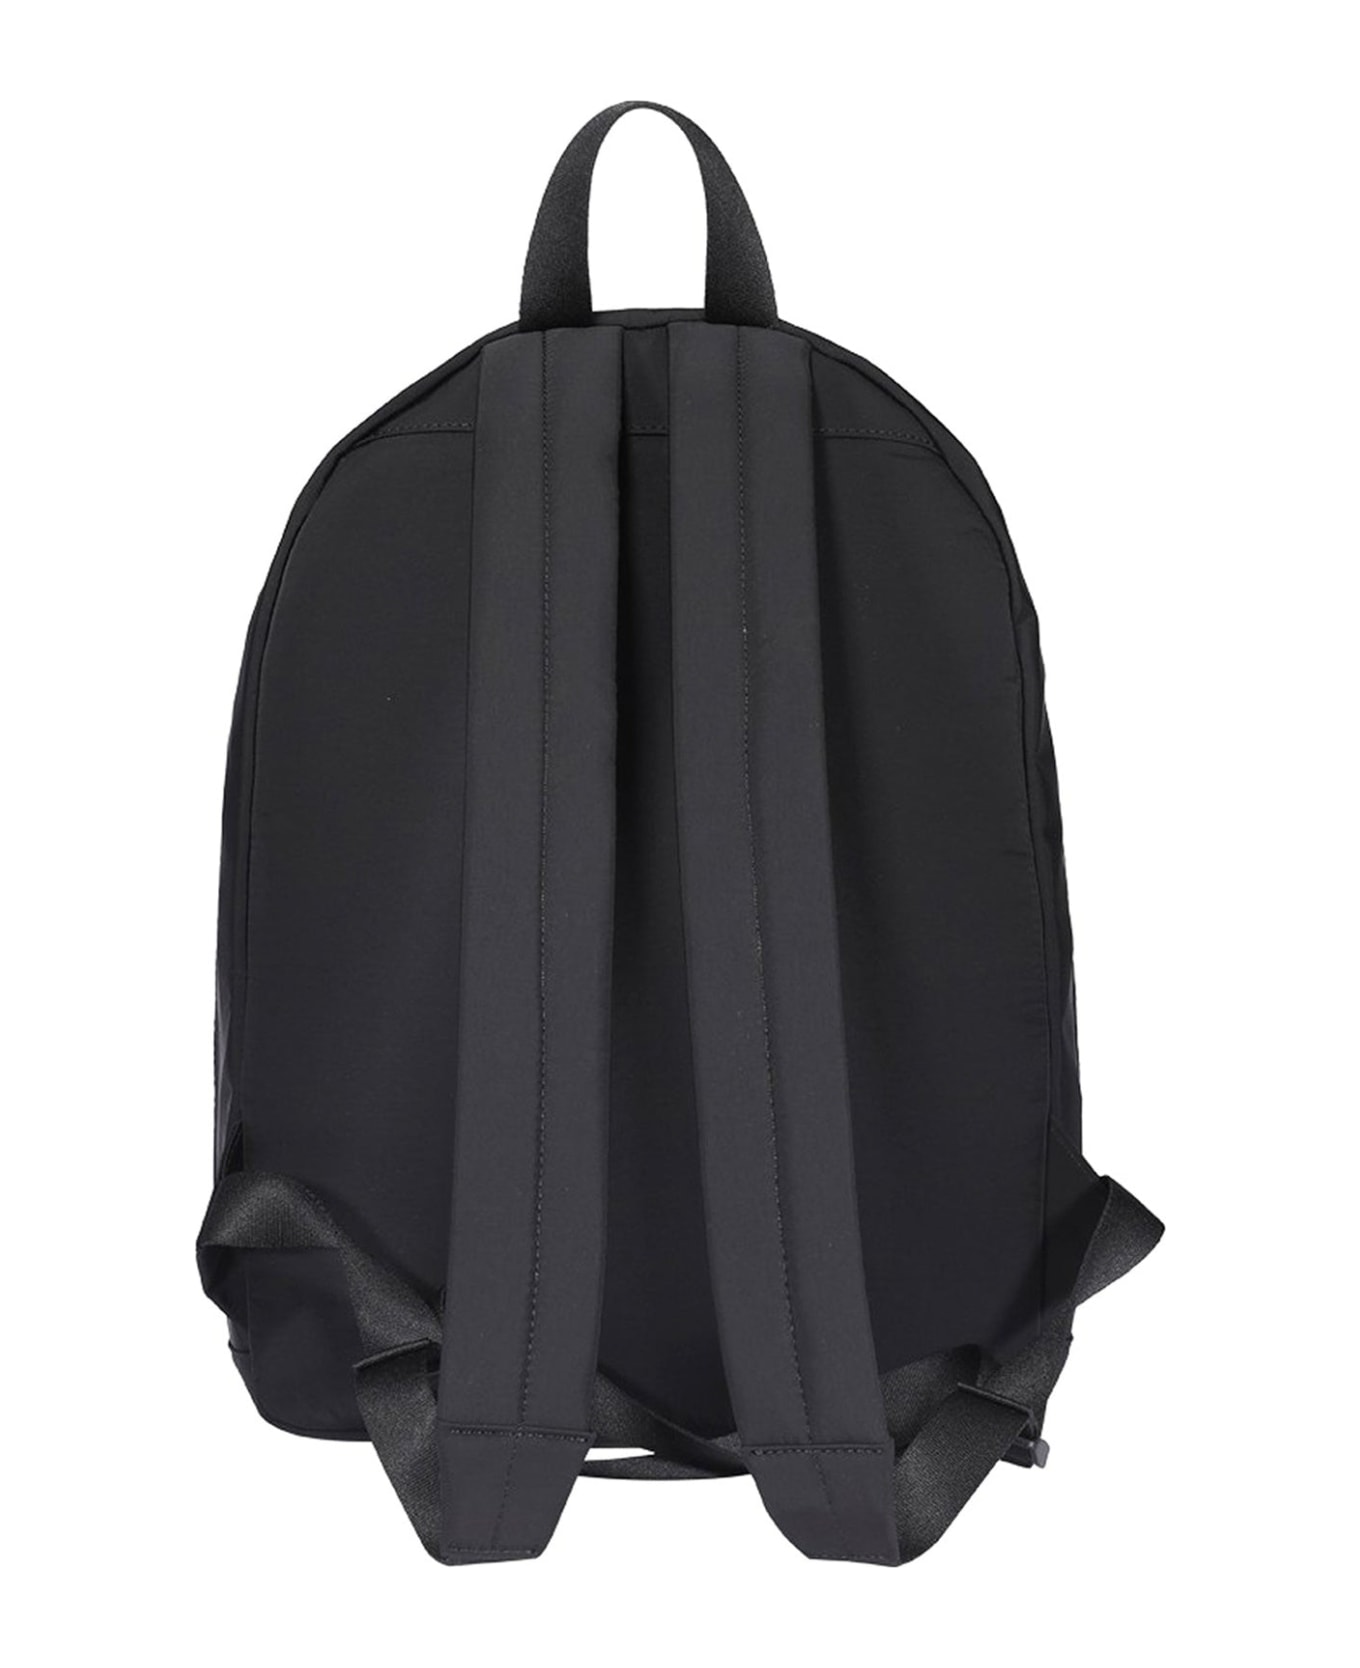 Marcelo Burlon County Of Milan Logo Backpack - Black